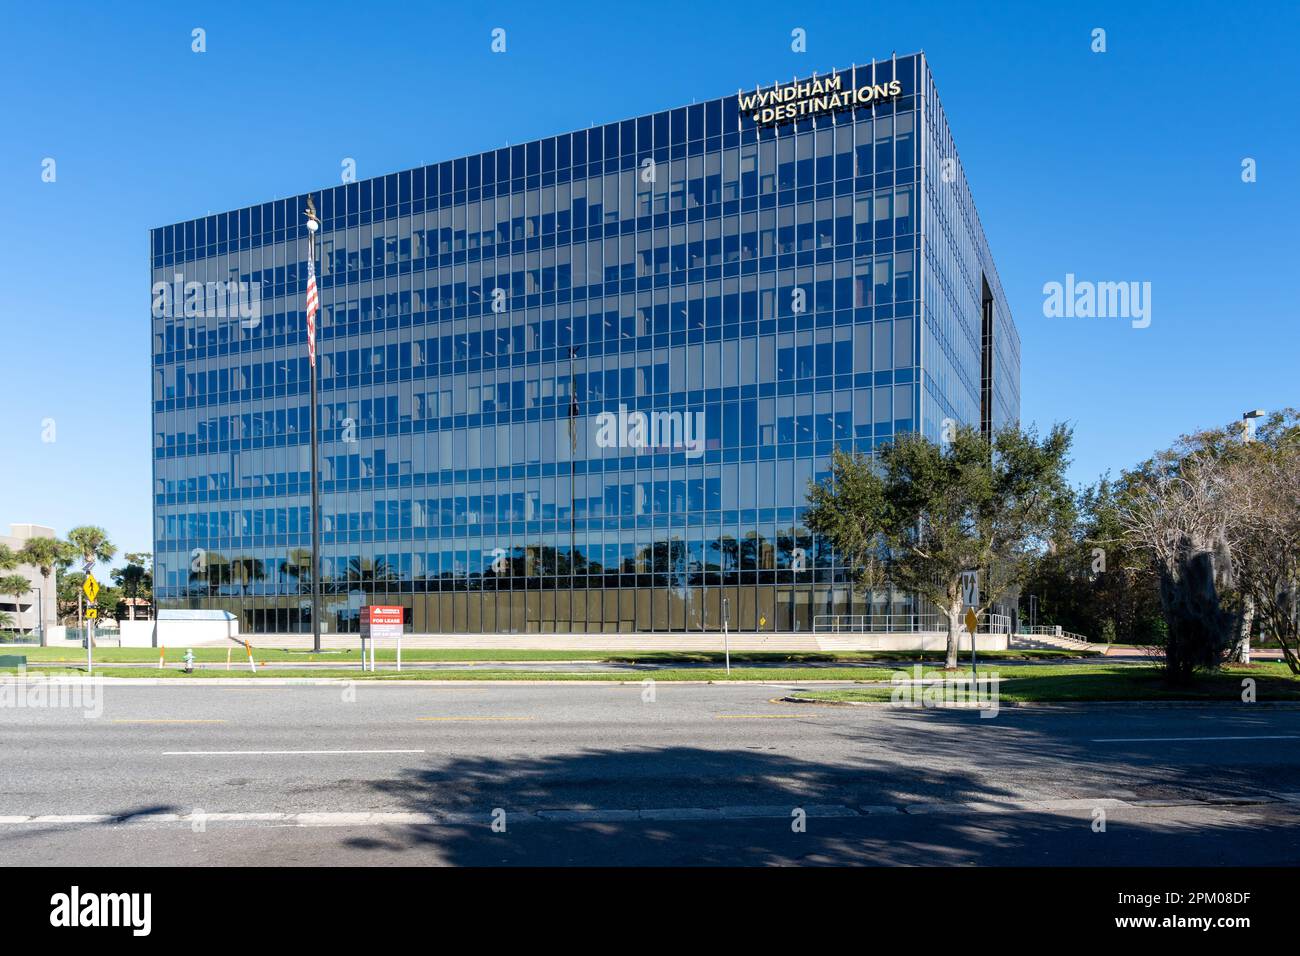 Wyndham Destinations sign on their headquarters building in Orlando, FL, USA. Stock Photo